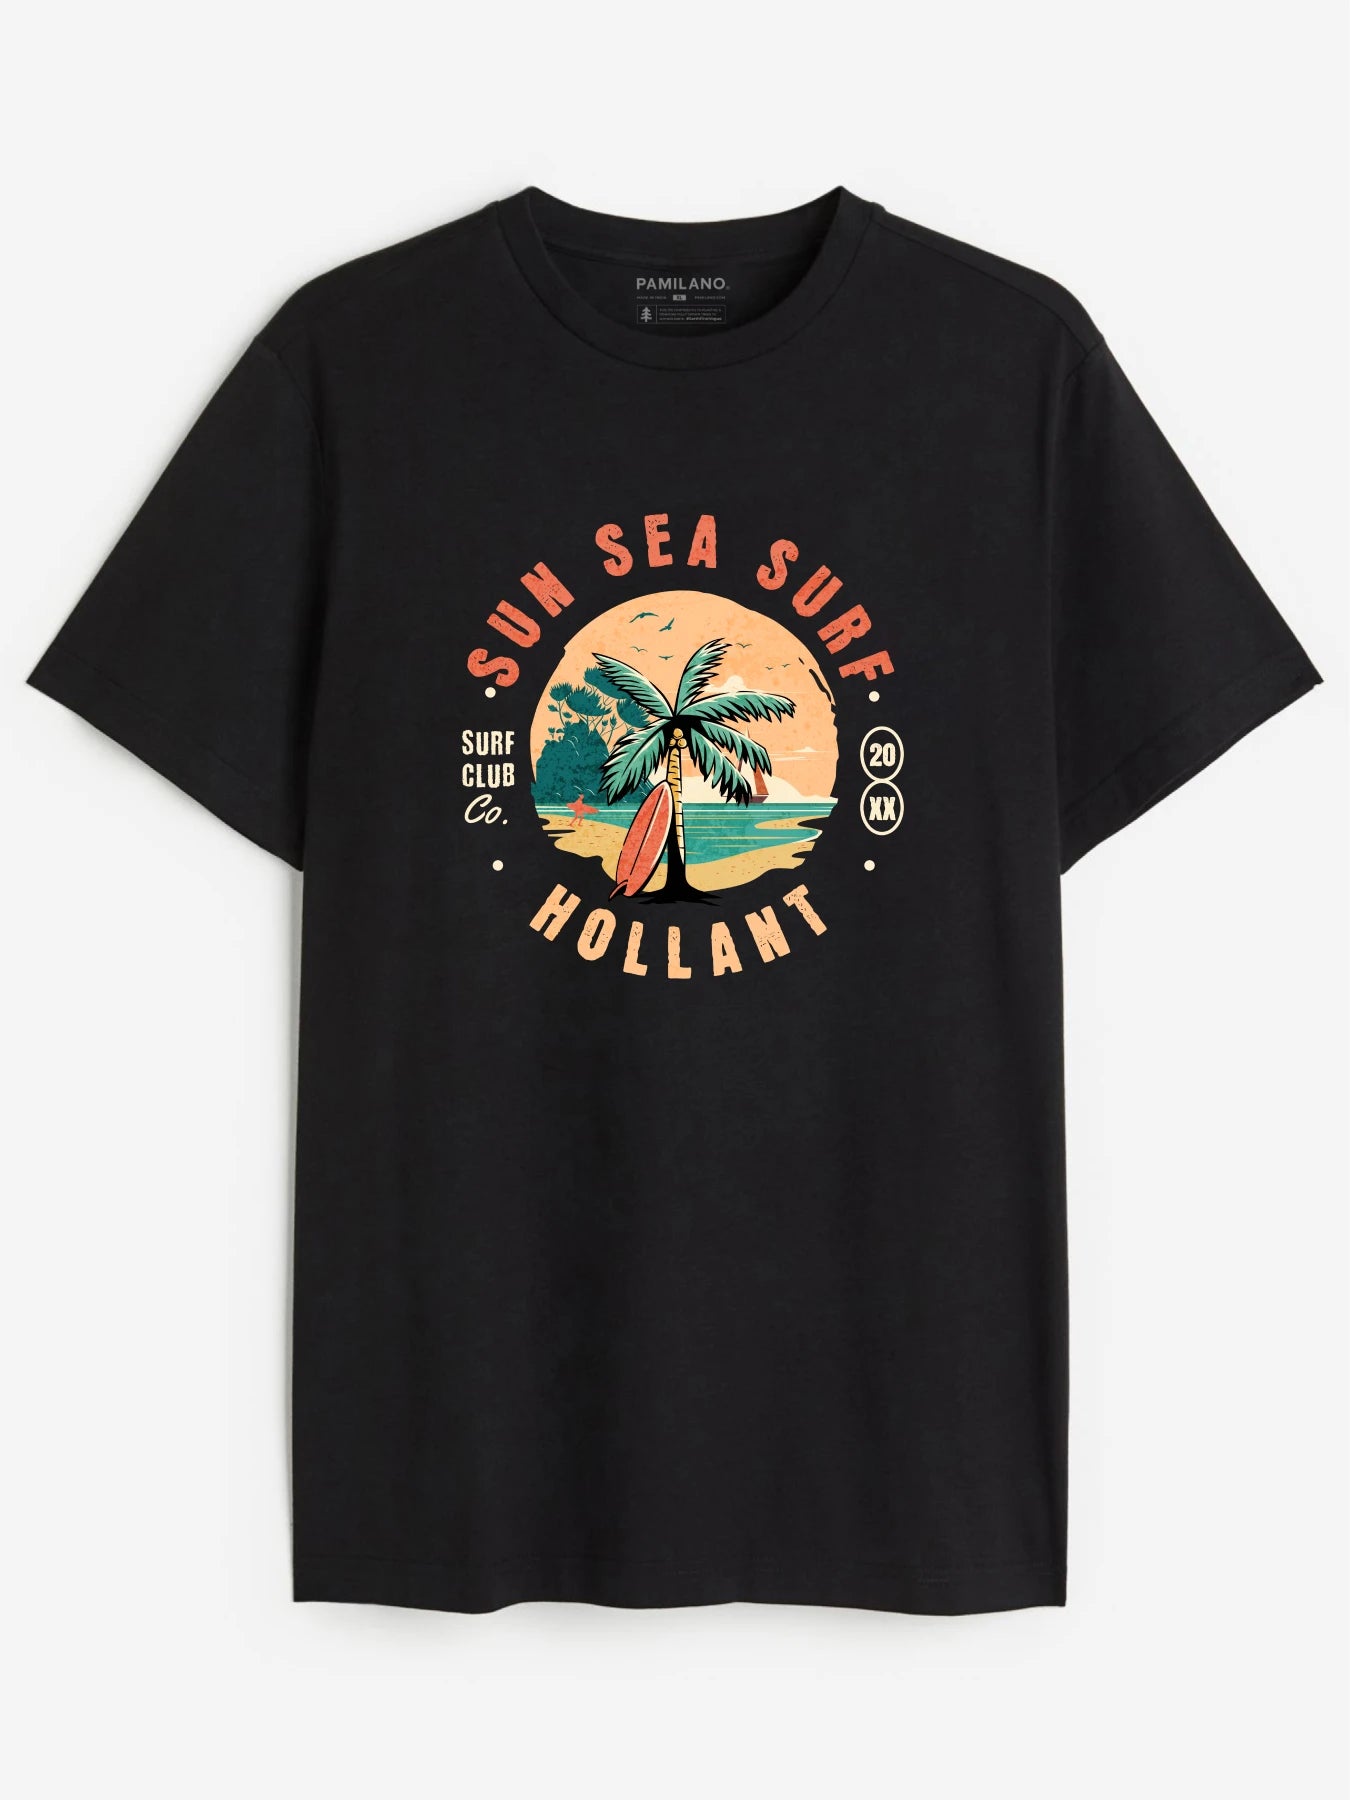 SUN SEA SURF - Unisex T-Shirt